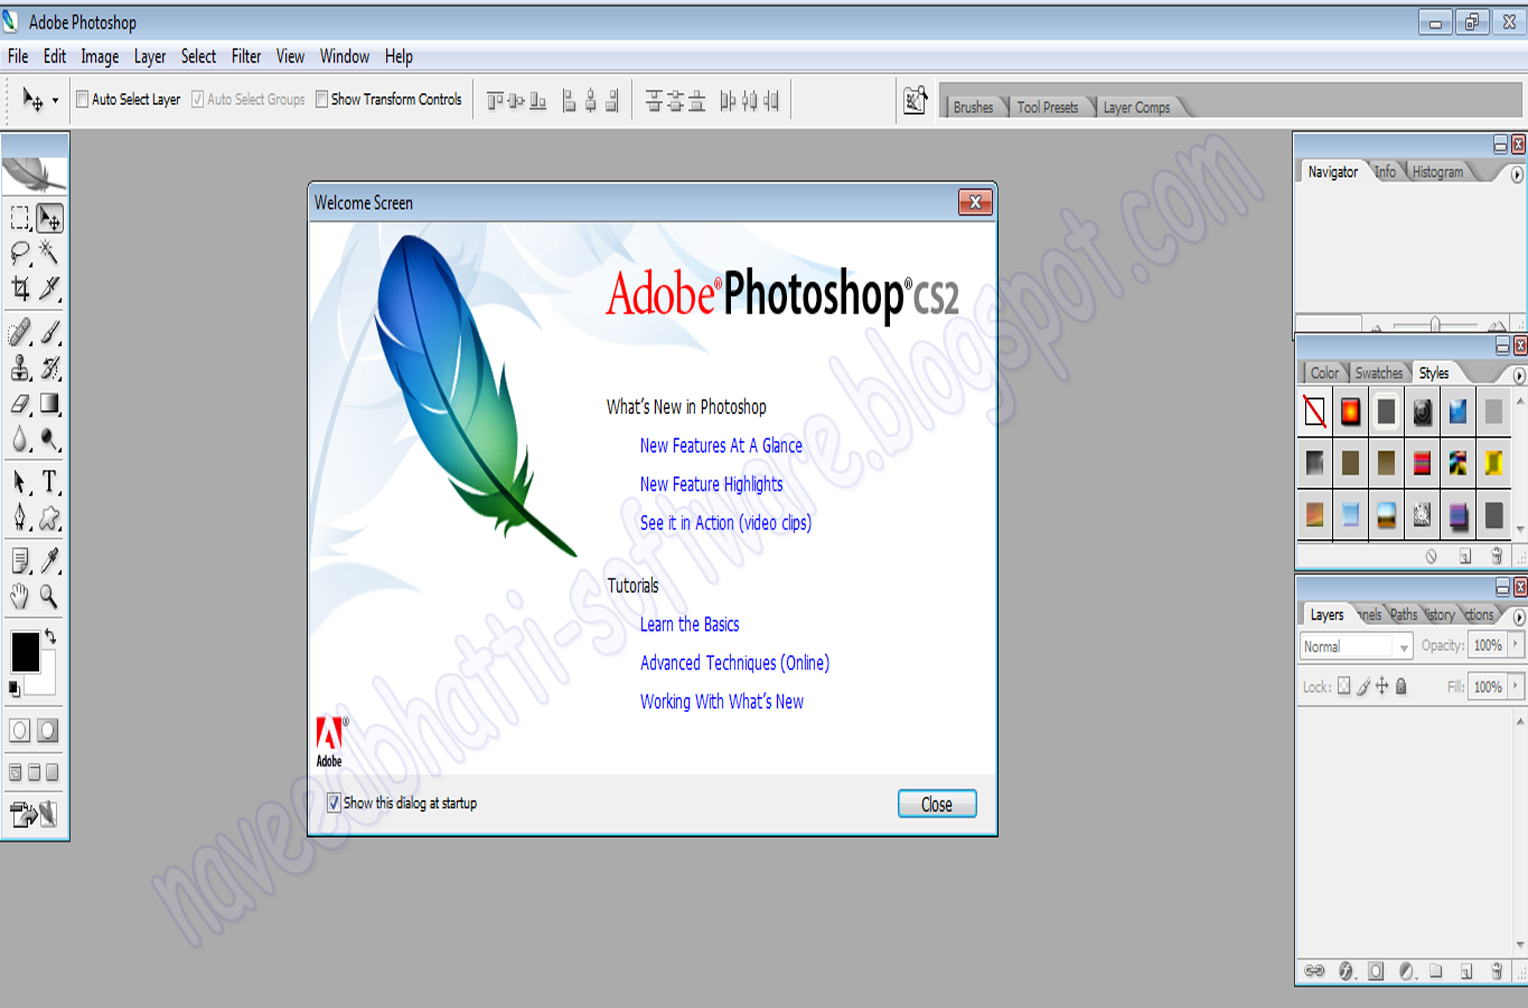 adobe photoshop cs2 9.0 crack keygen free download